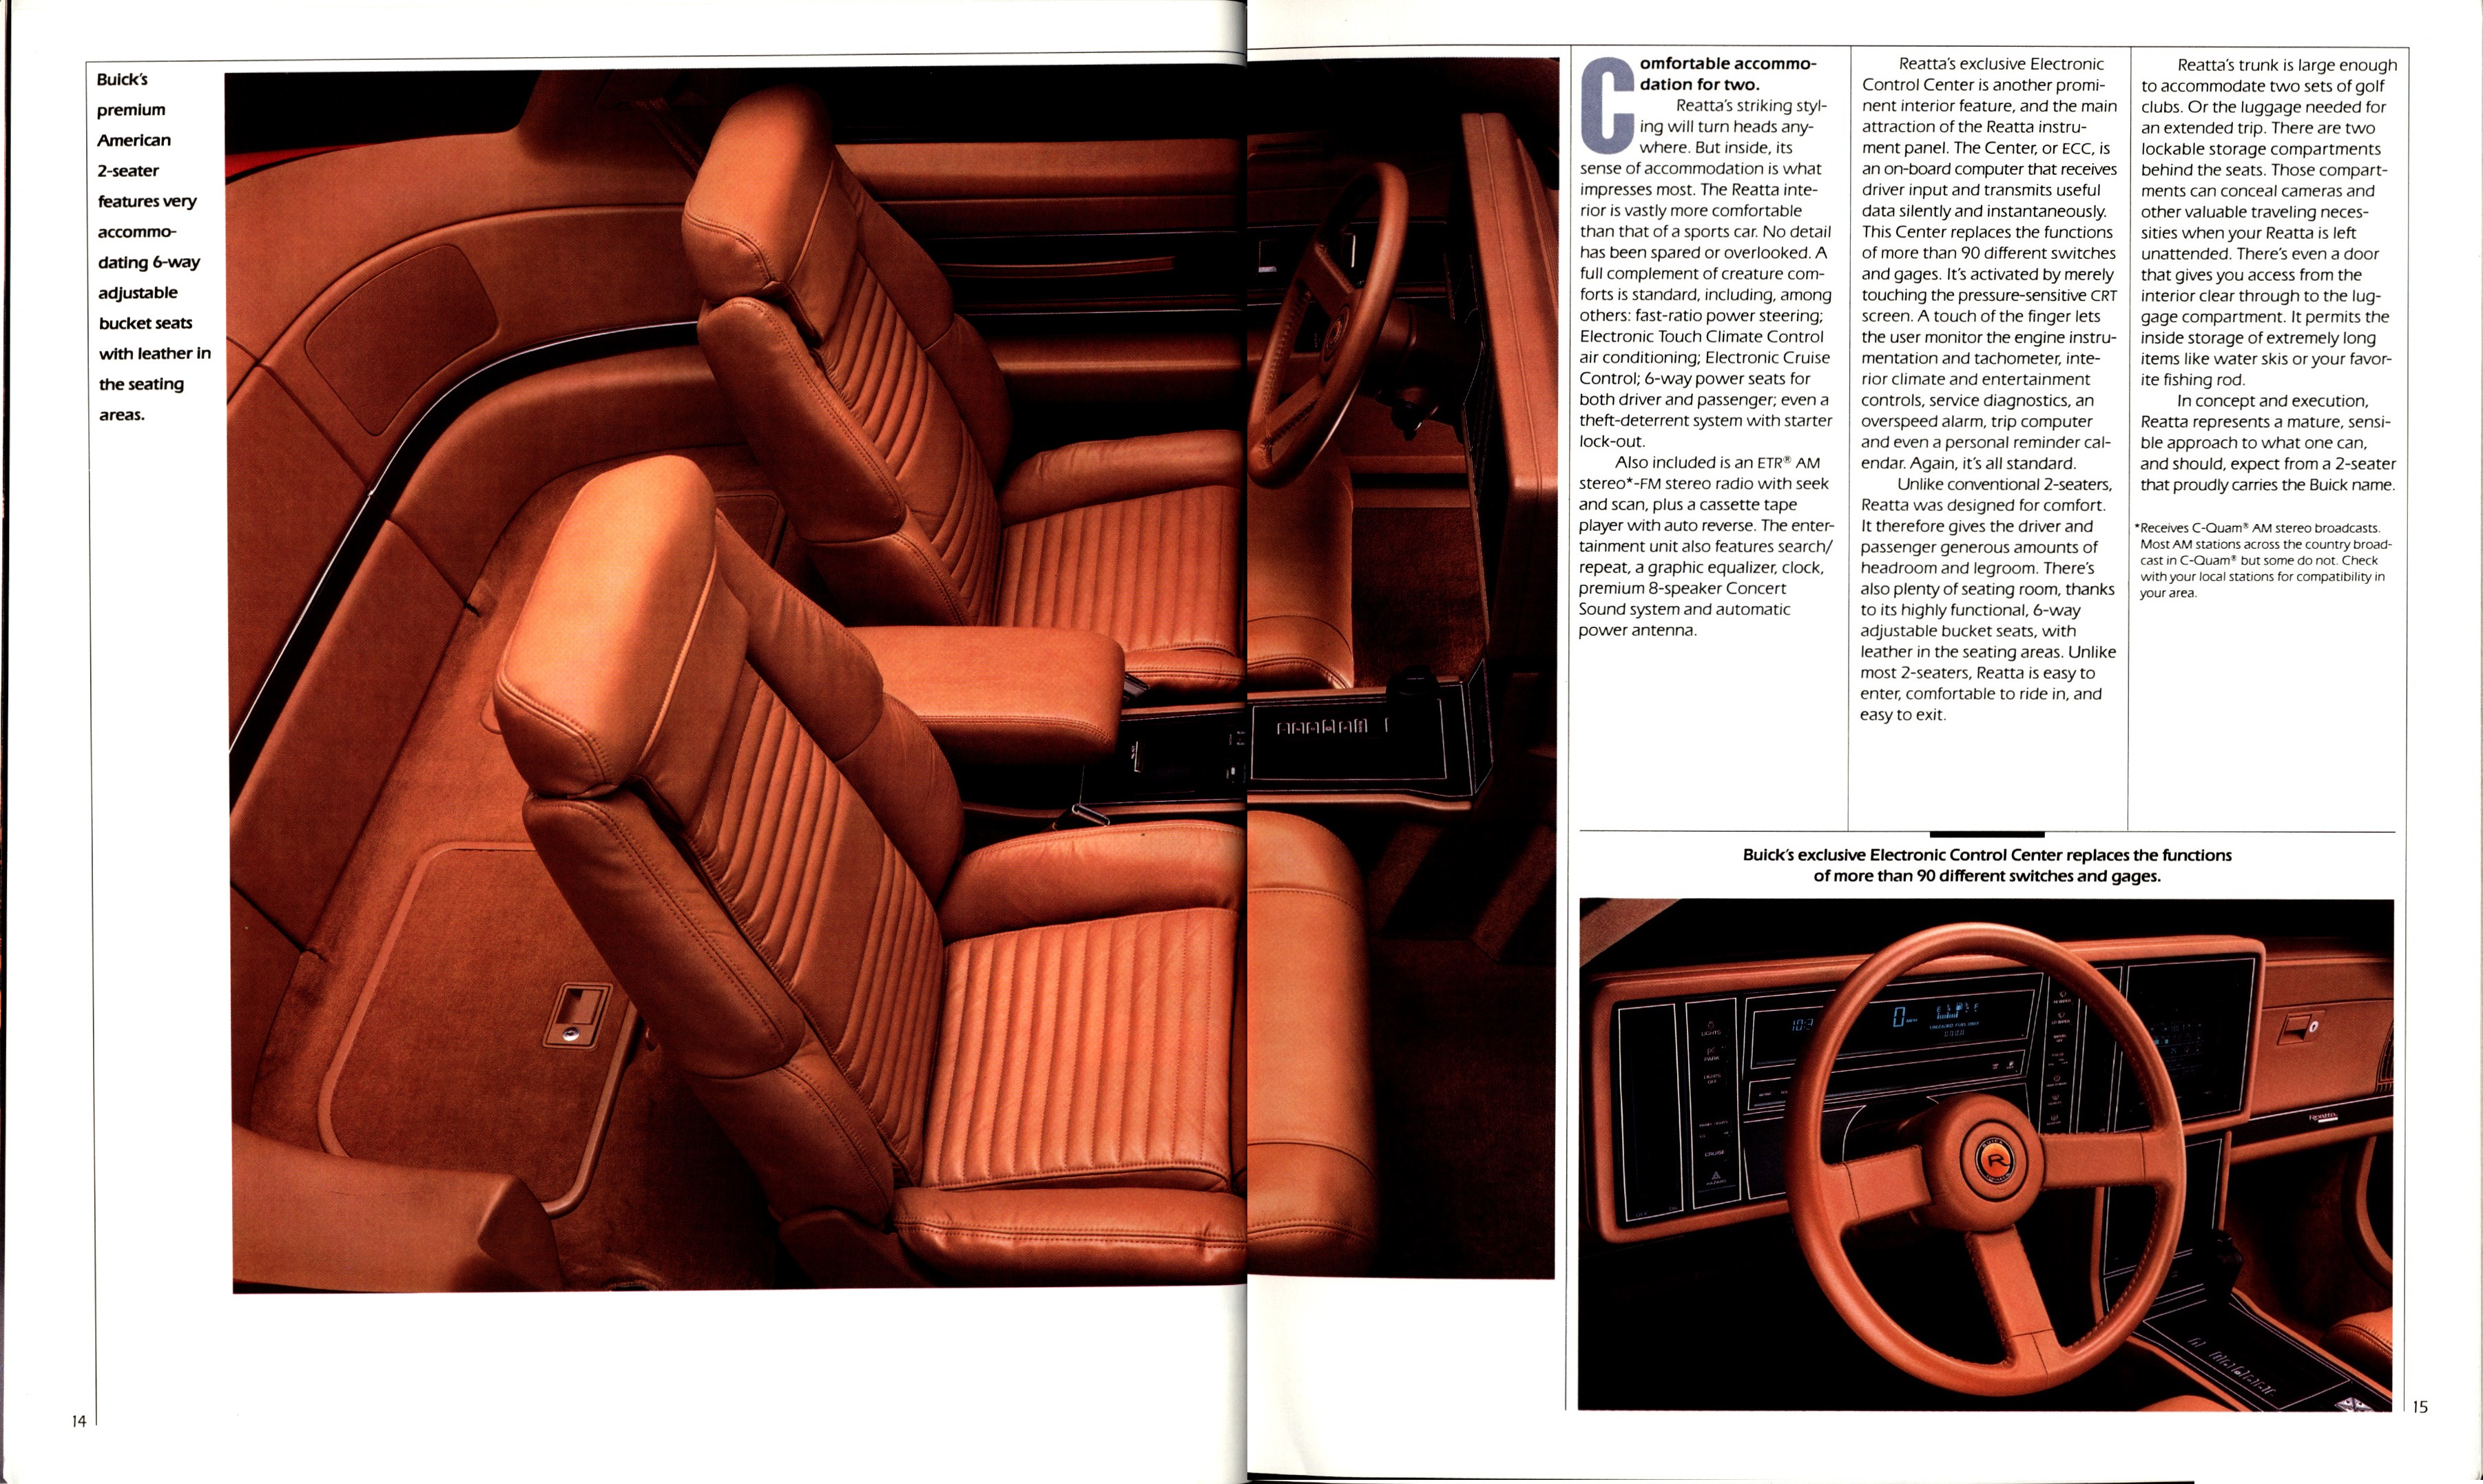 1989 Buick Full Line Prestige Brochure 14-15